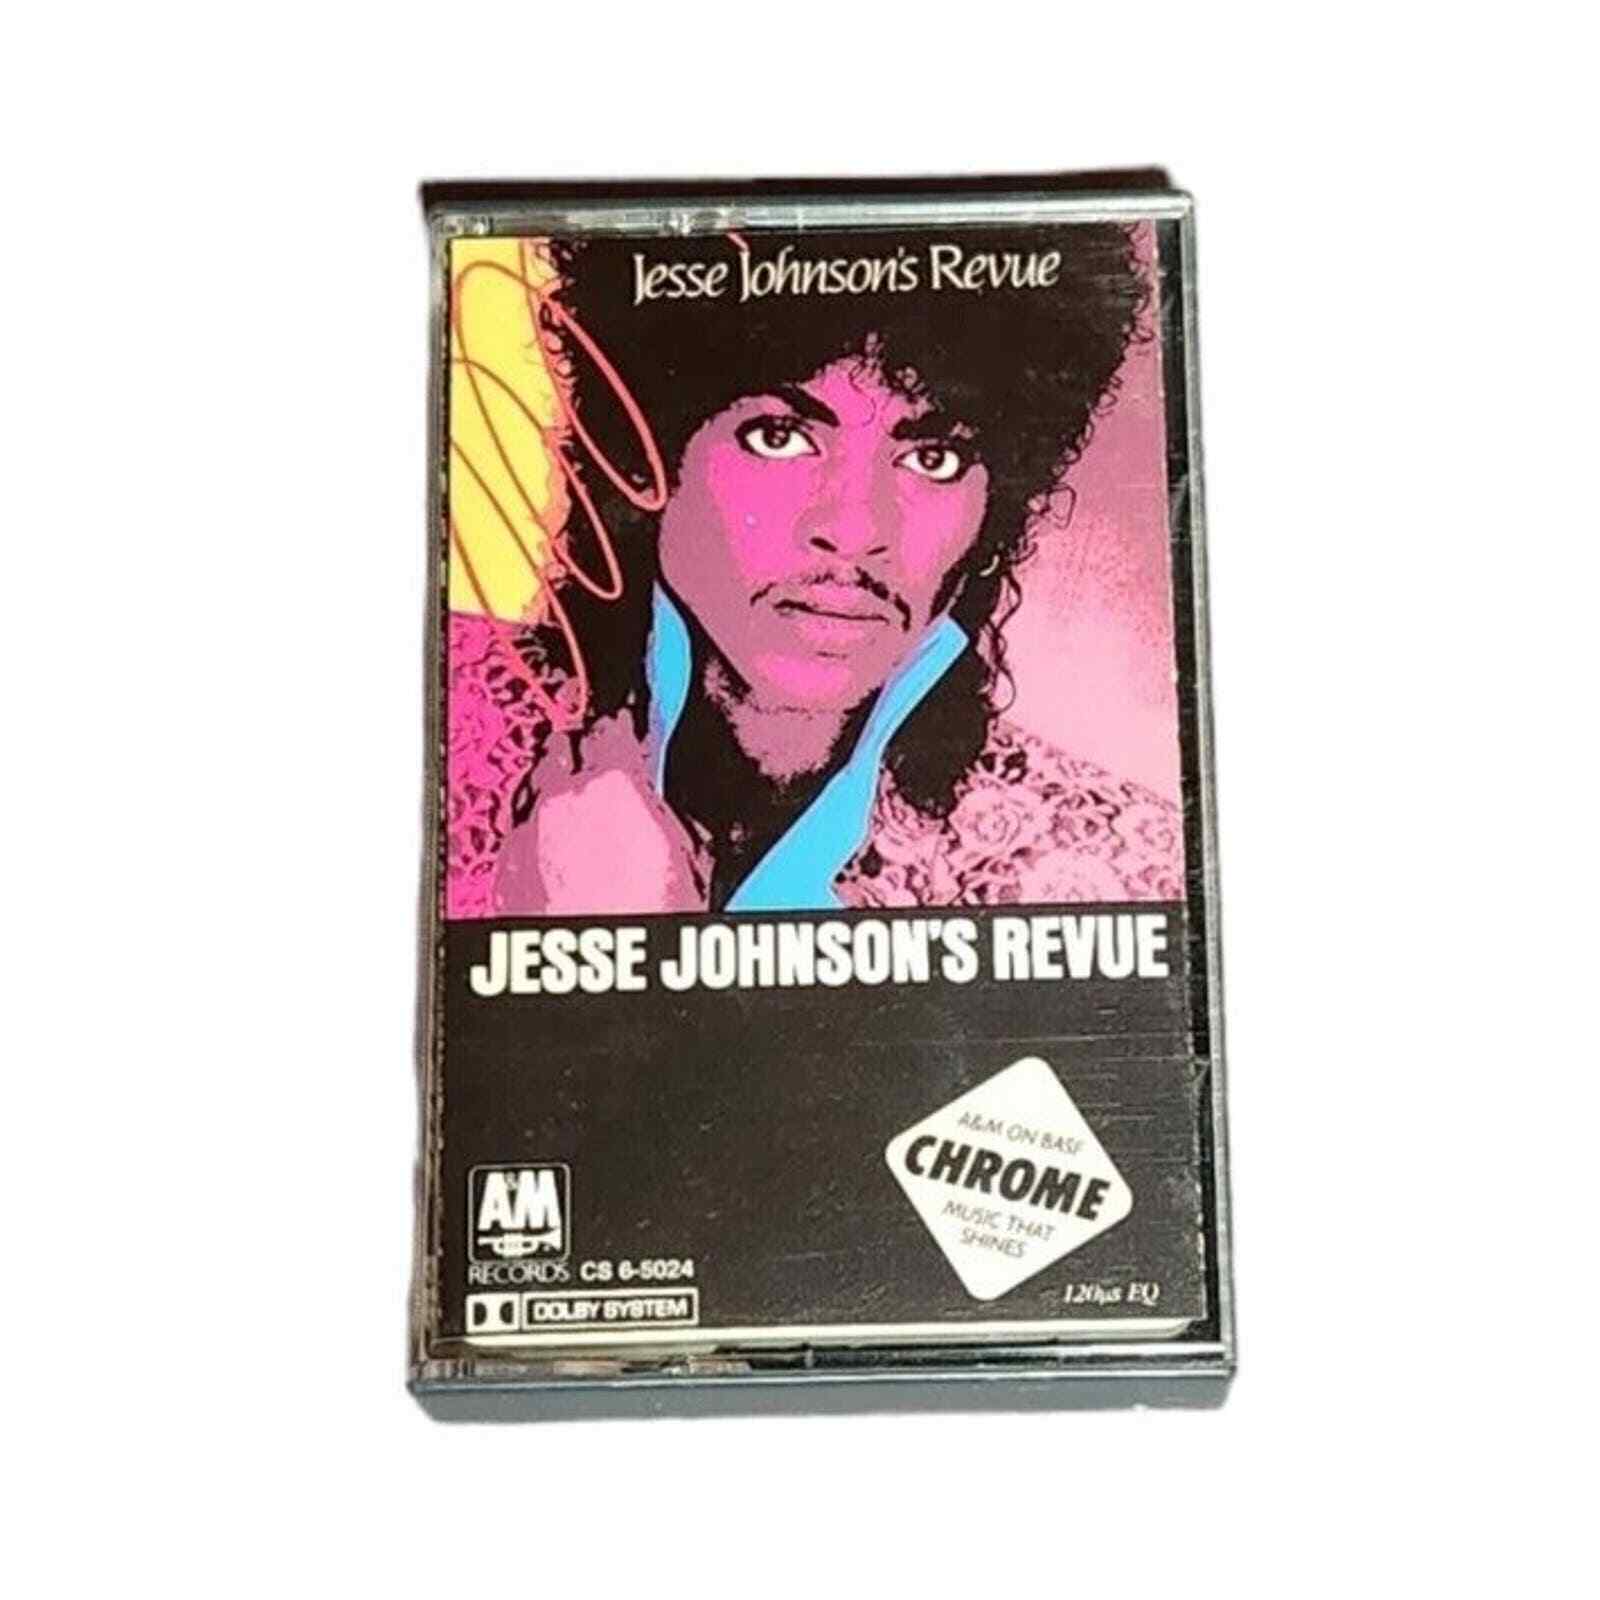 Jessie Johnson\'s Revue (1985) Album Cassette 80s Pop Music Tested Pre-owned